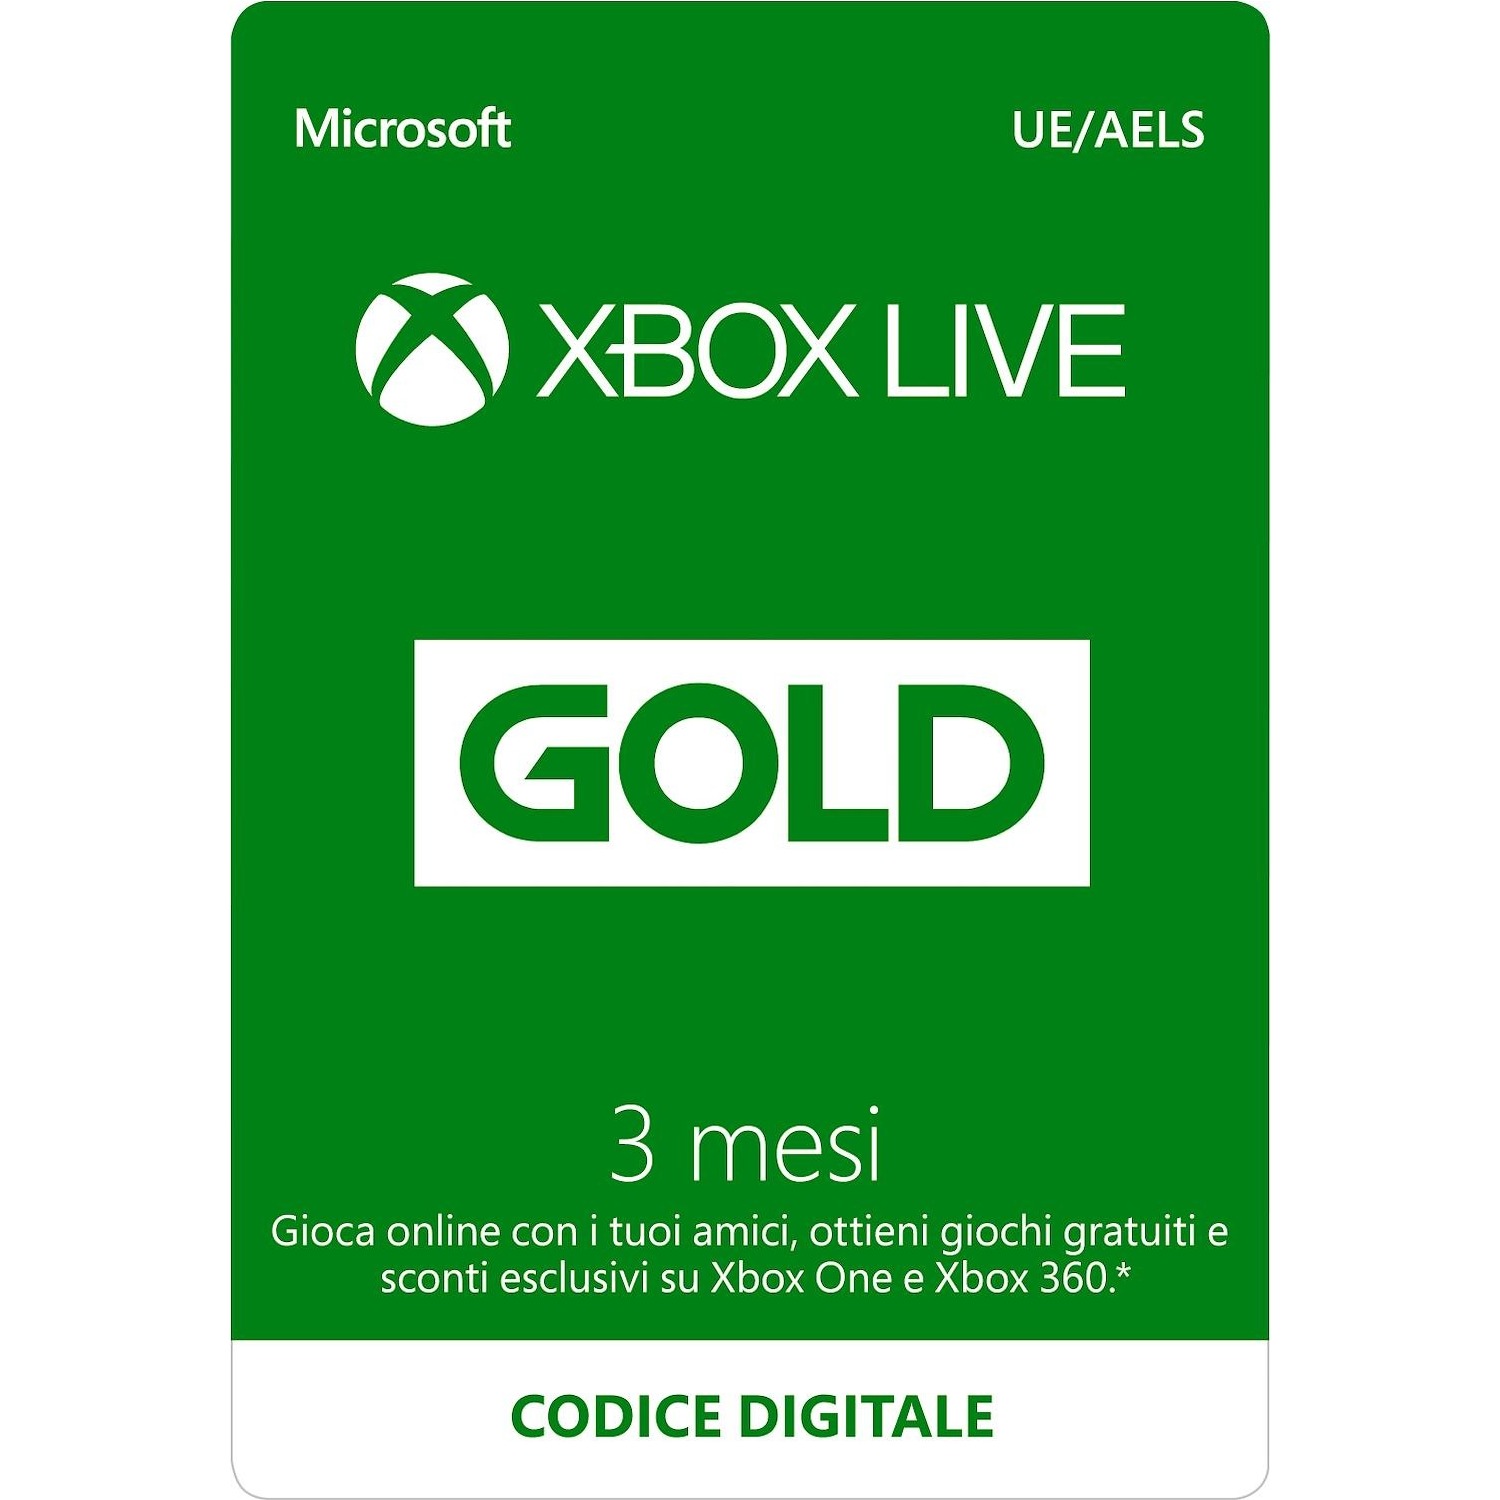 Immagine per Microsoft Xbox Live Gold 3 mesi CARD da DIMOStore